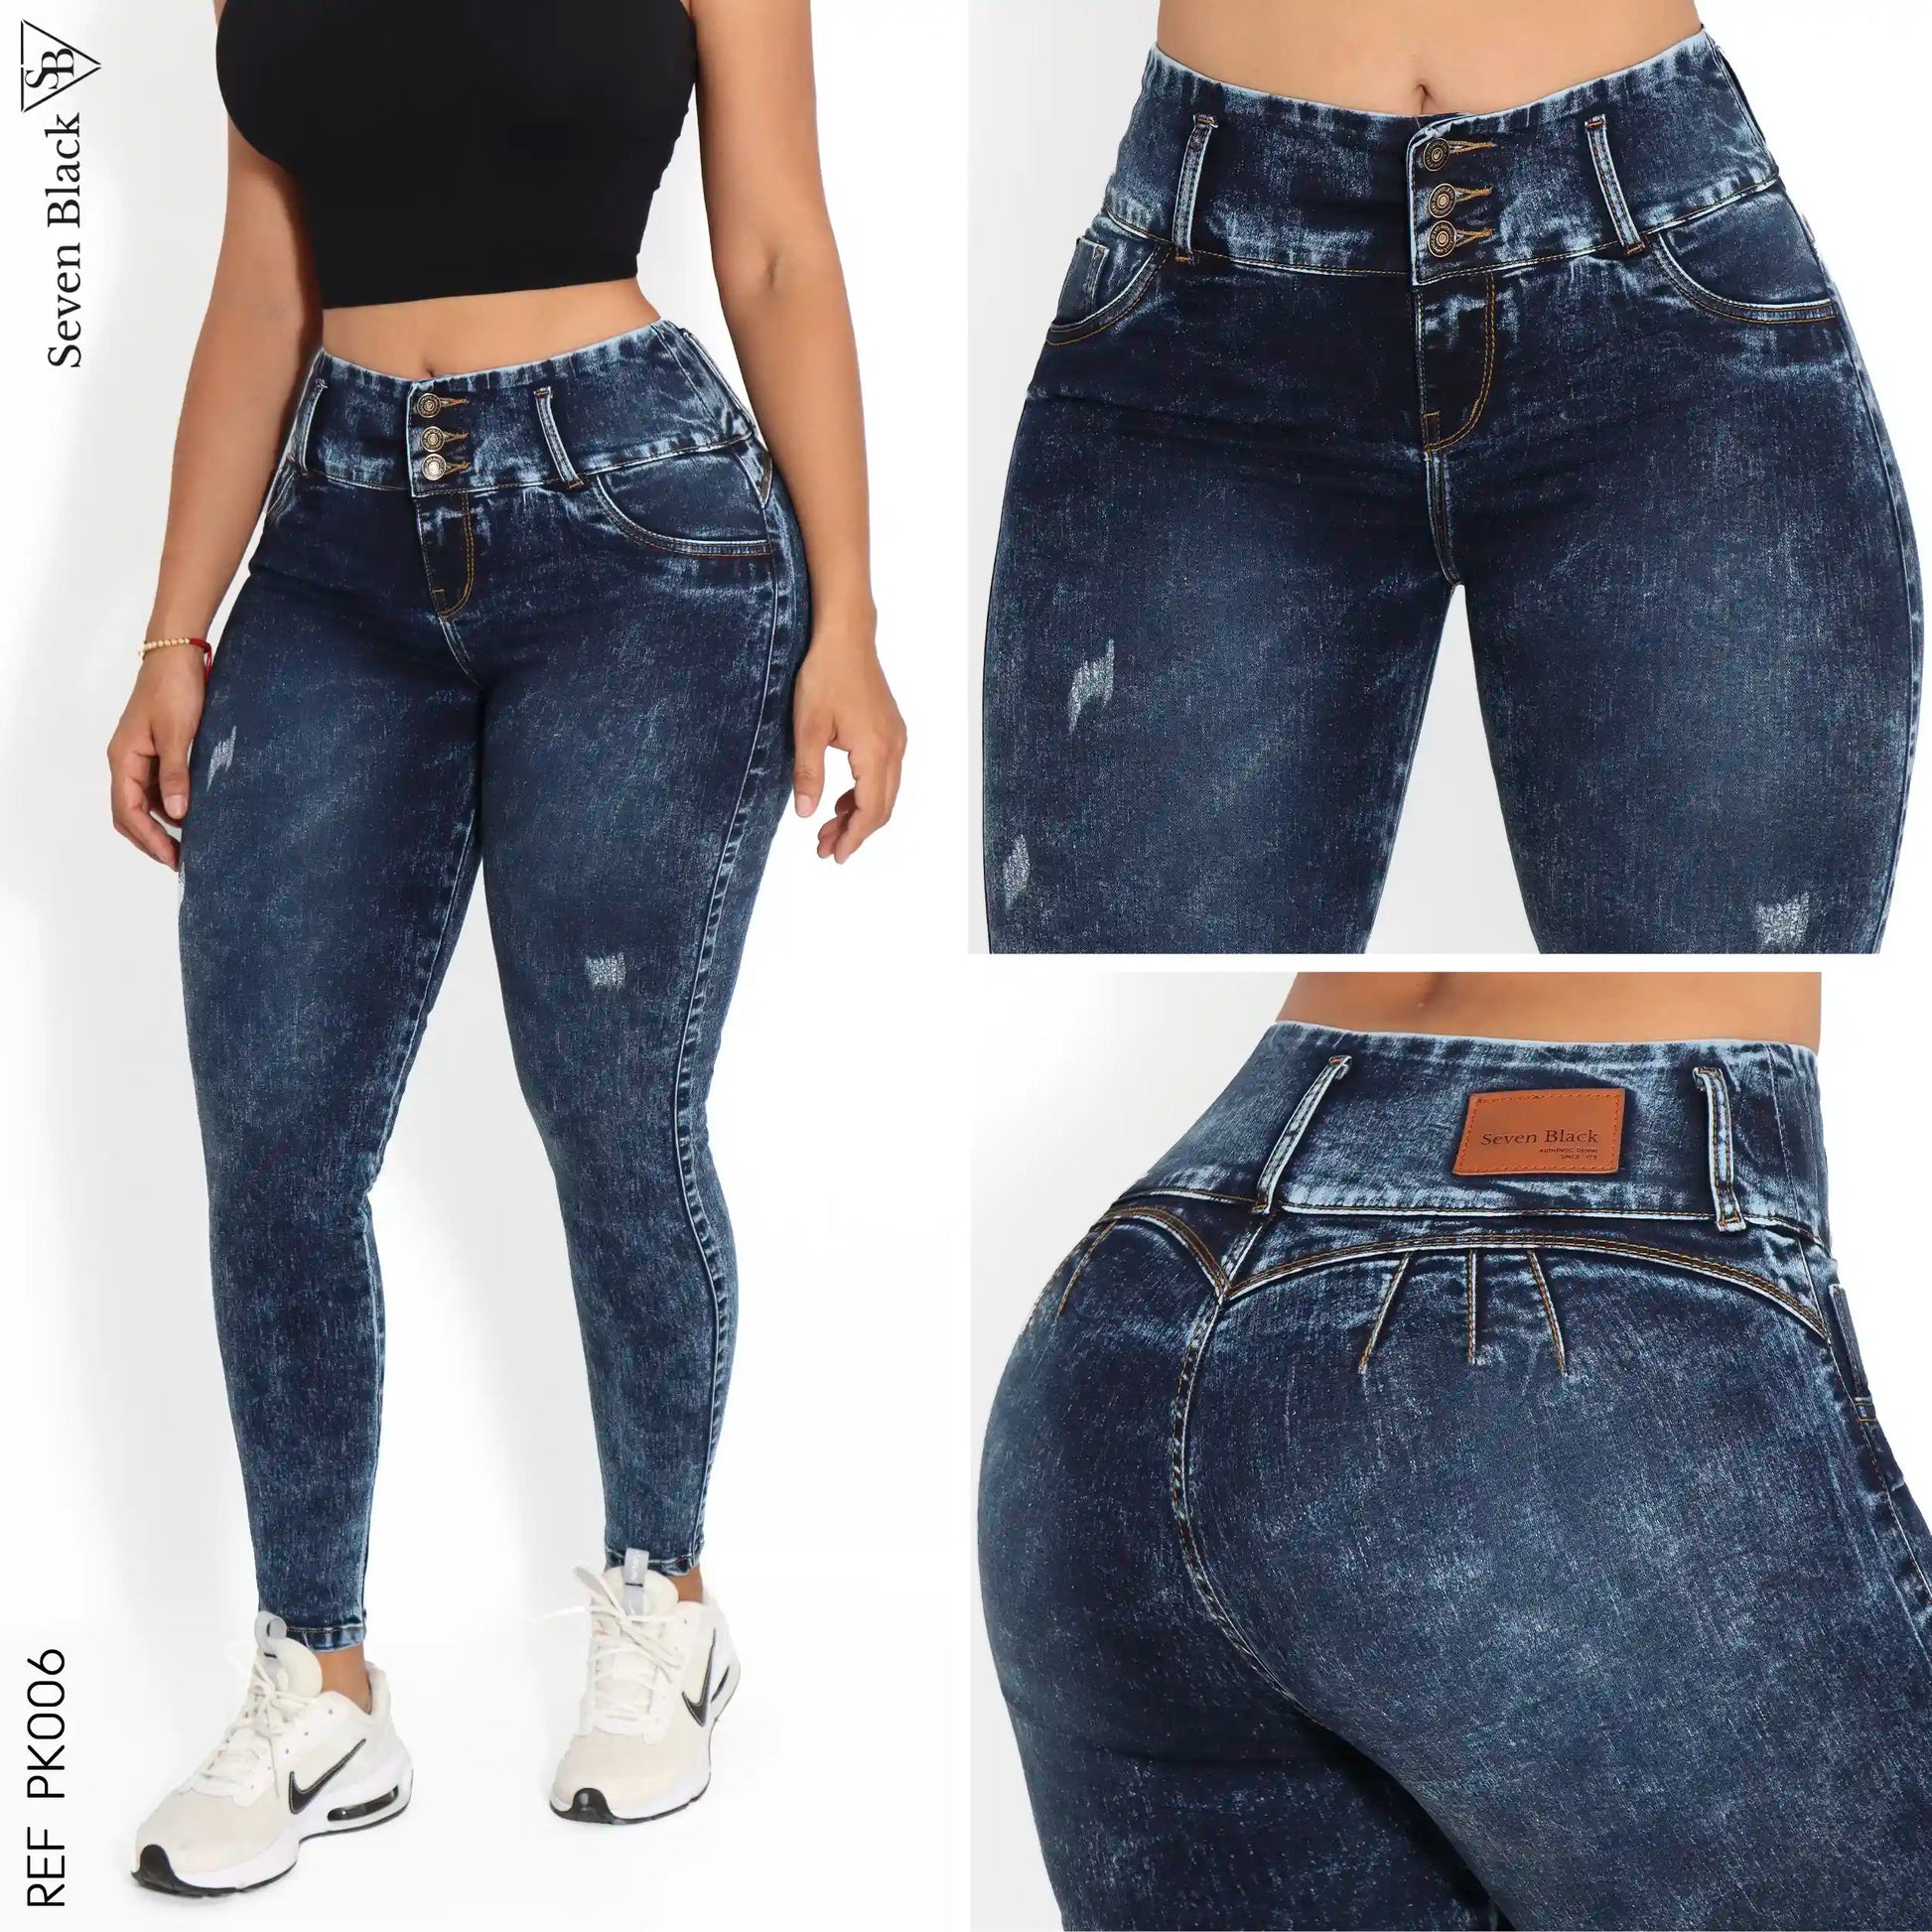 Jeans Mujer Pretina Ancha Claro – Guethe08